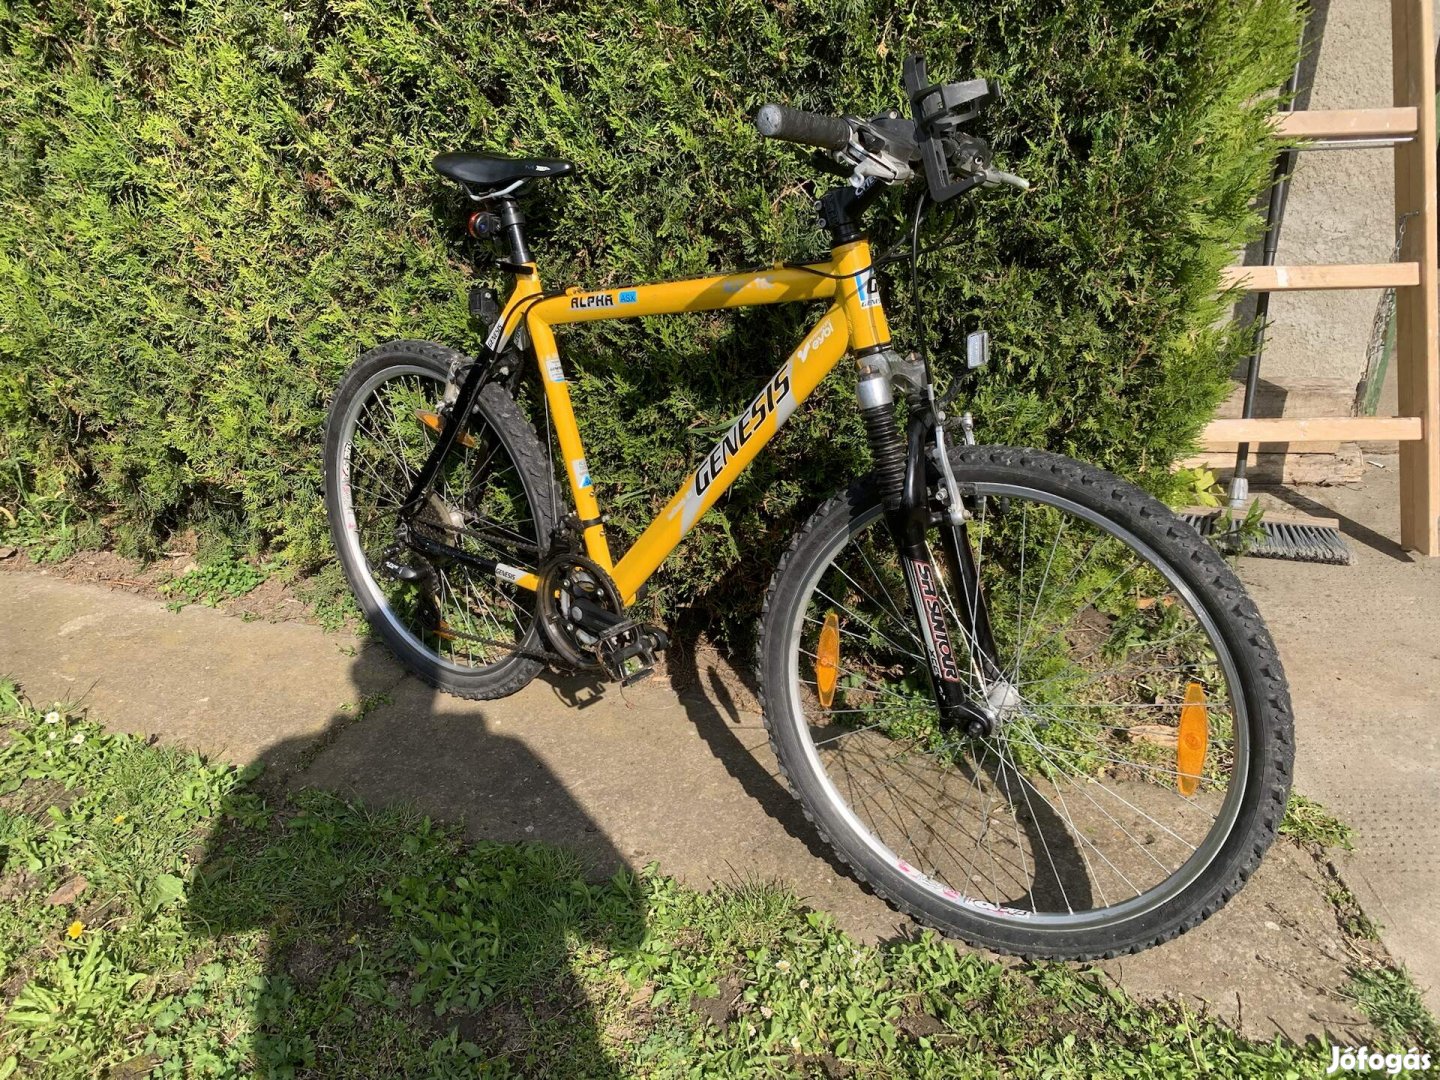 Genesis Alpha Alu-Tec kerékpár